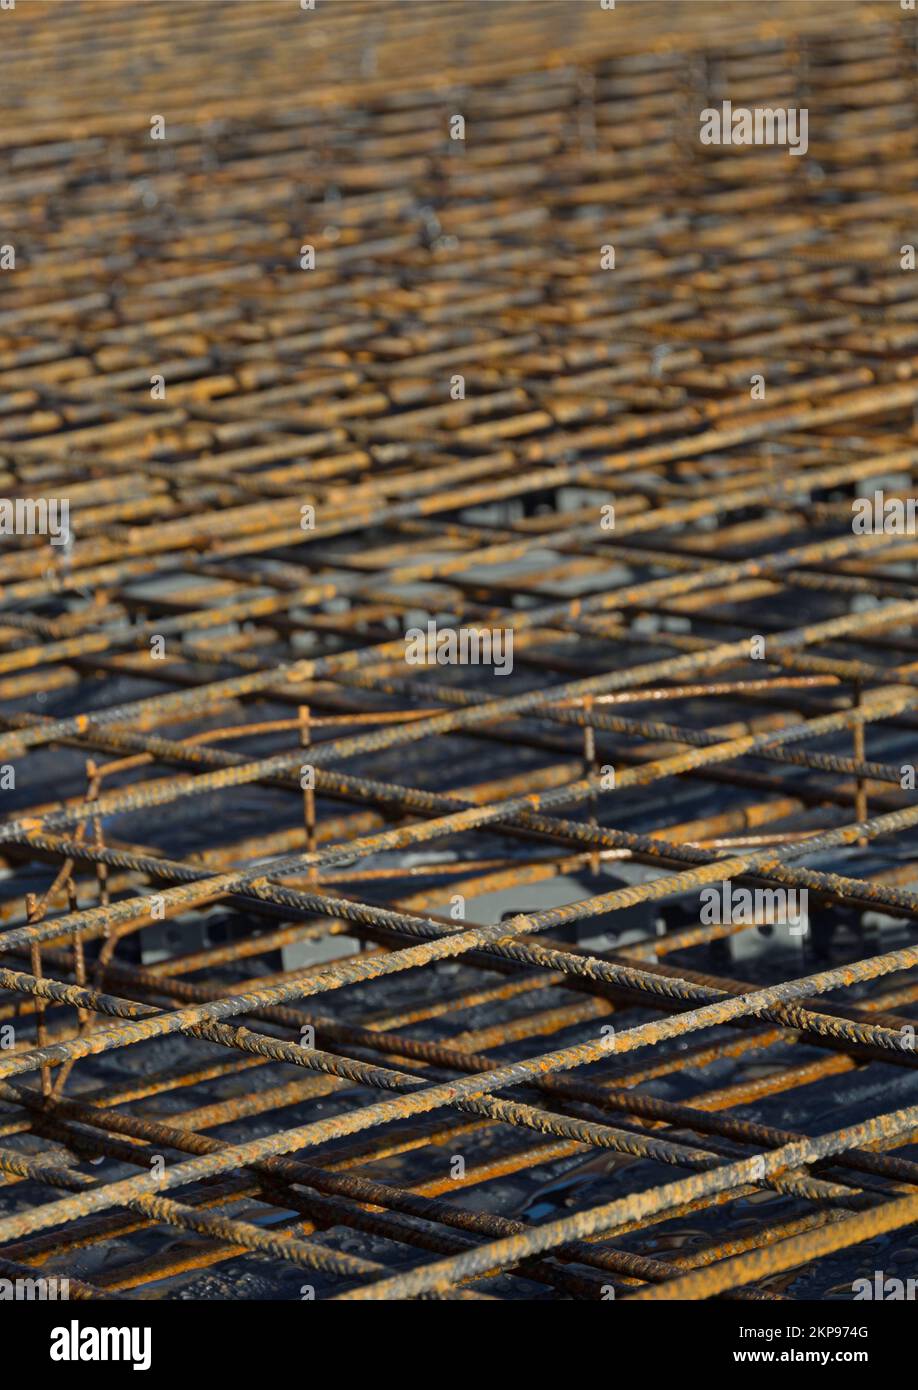 Steel reinforcement / reinforcement mesh of a floor slab, portrait format Stock Photo